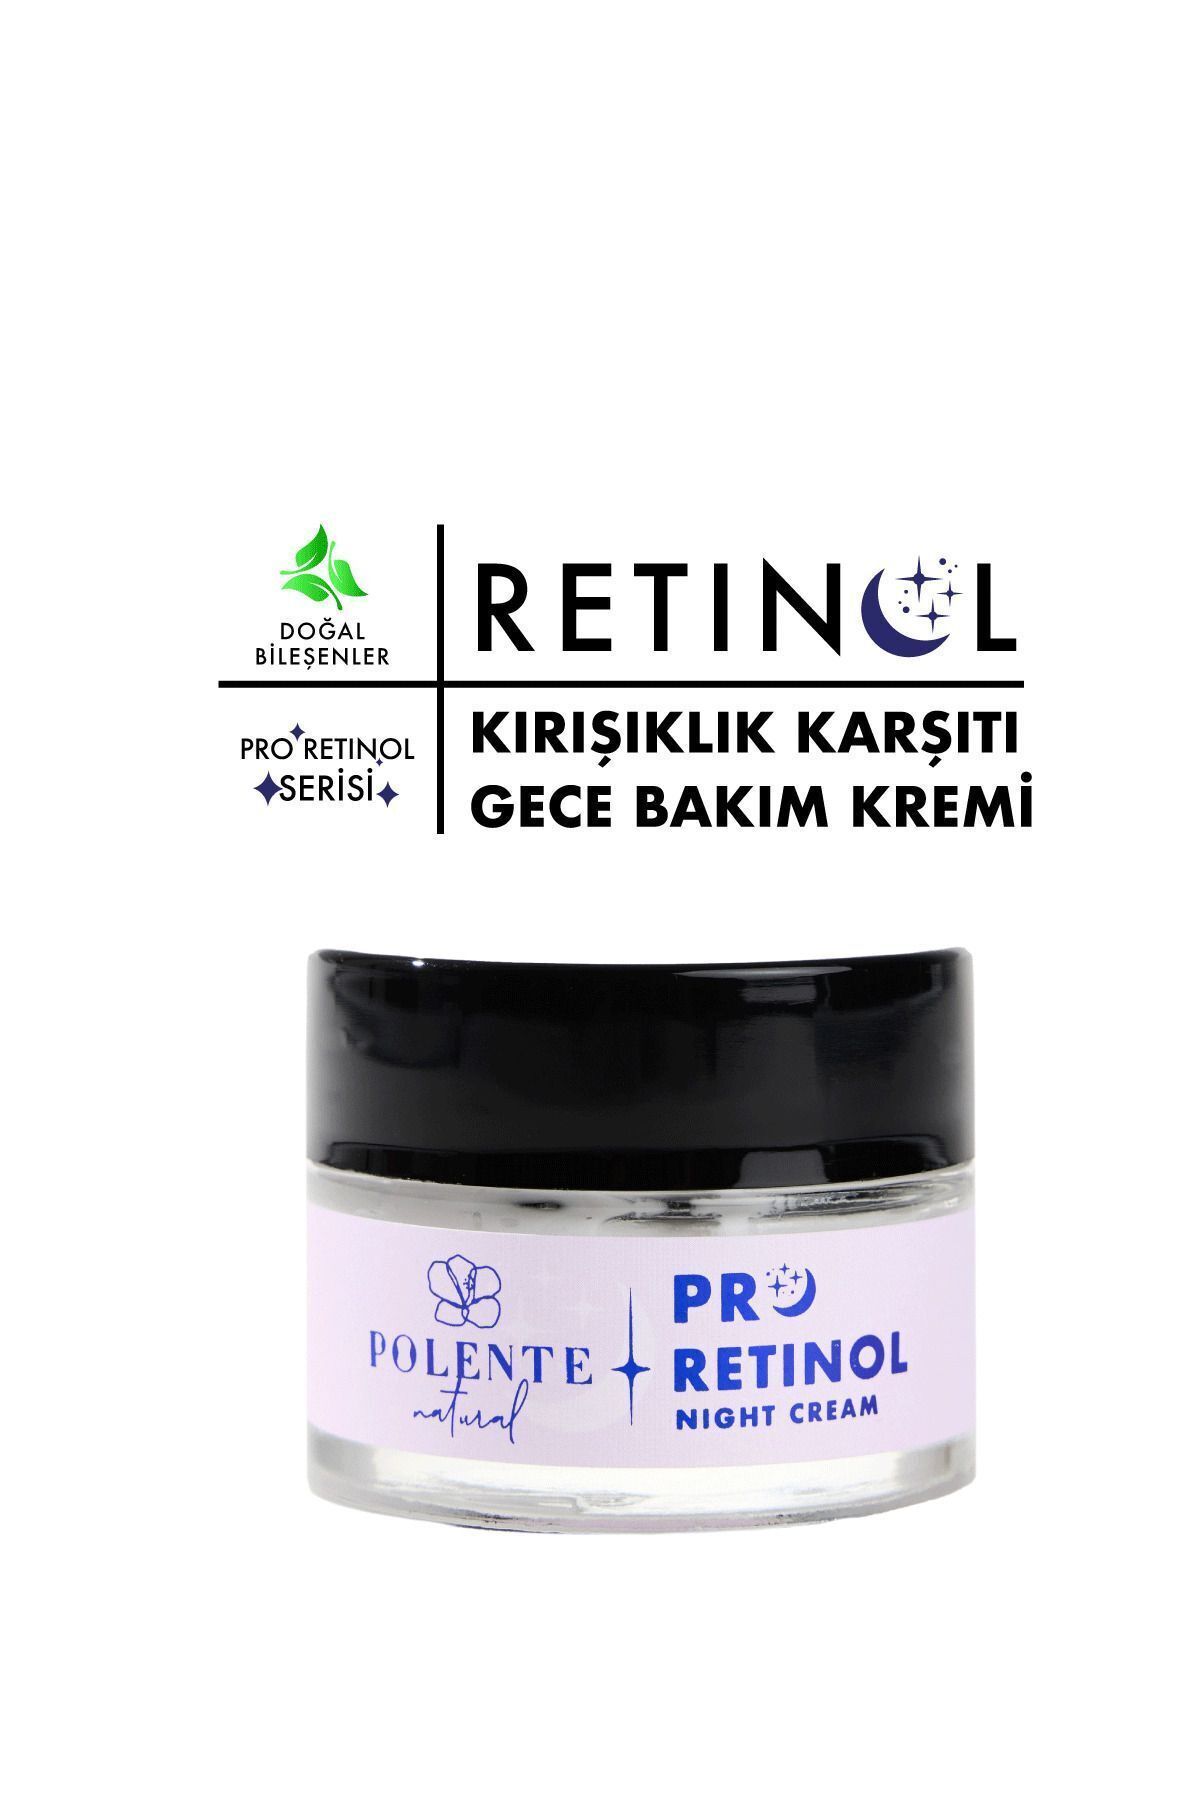 Polente Natural Pro Retinol Nıght Cream- Retinol Içeren Gece Bakım Kremi (50 ML)